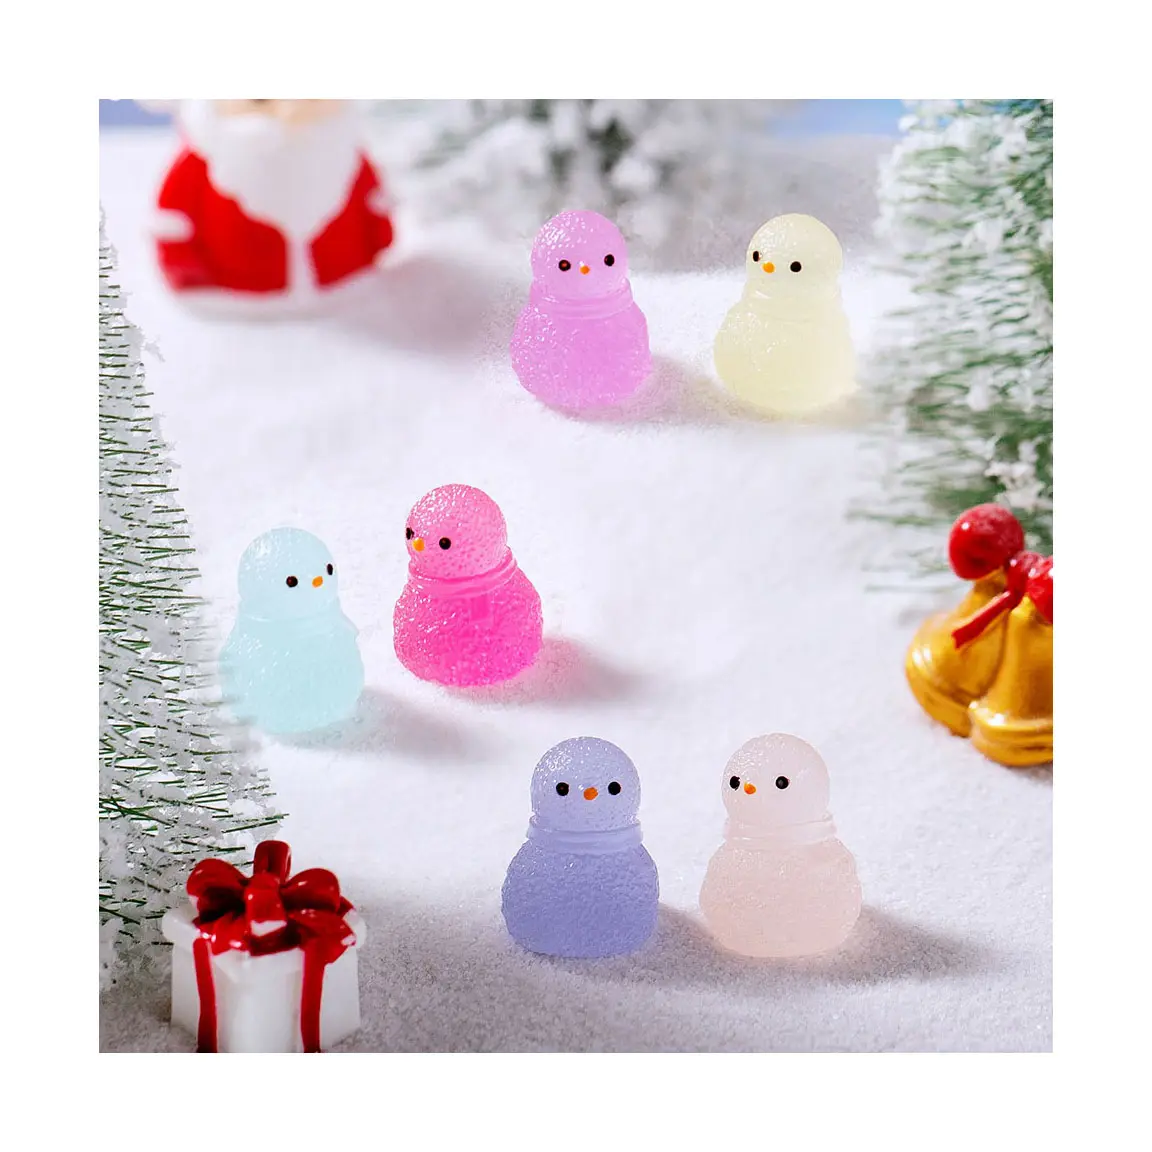 Miniatur dekorasi manusia salju, hiasan gantung Resin bercahaya untuk kerajinan DIY hadiah Natal Desktop